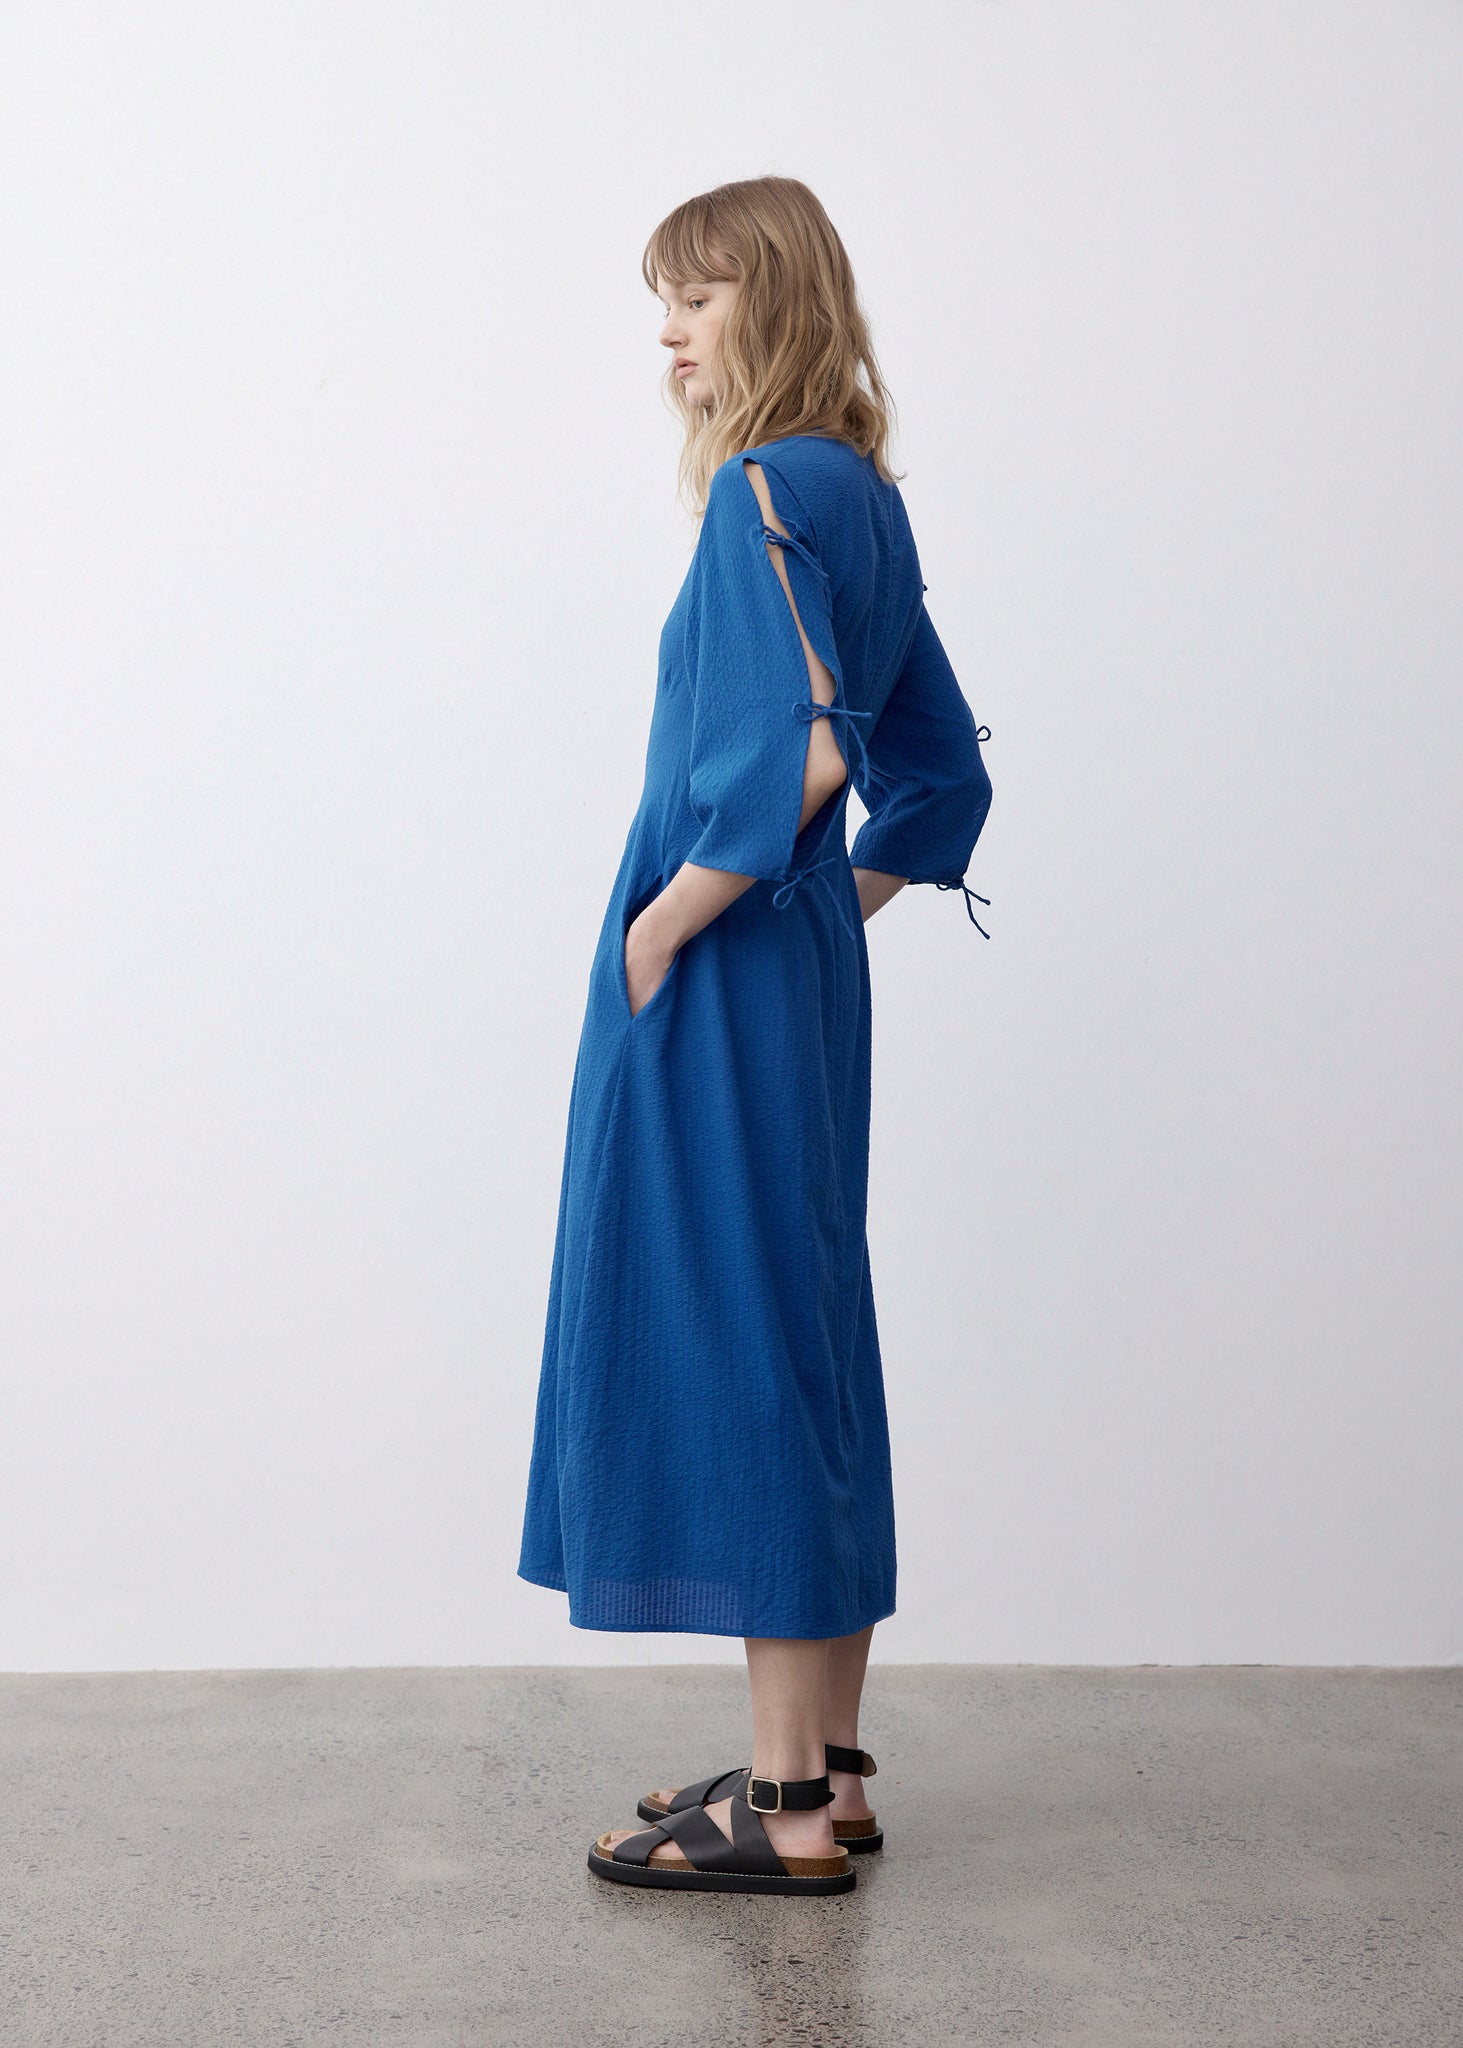 Überwältigend Matisse Blue Dress – Foemina, Claudia